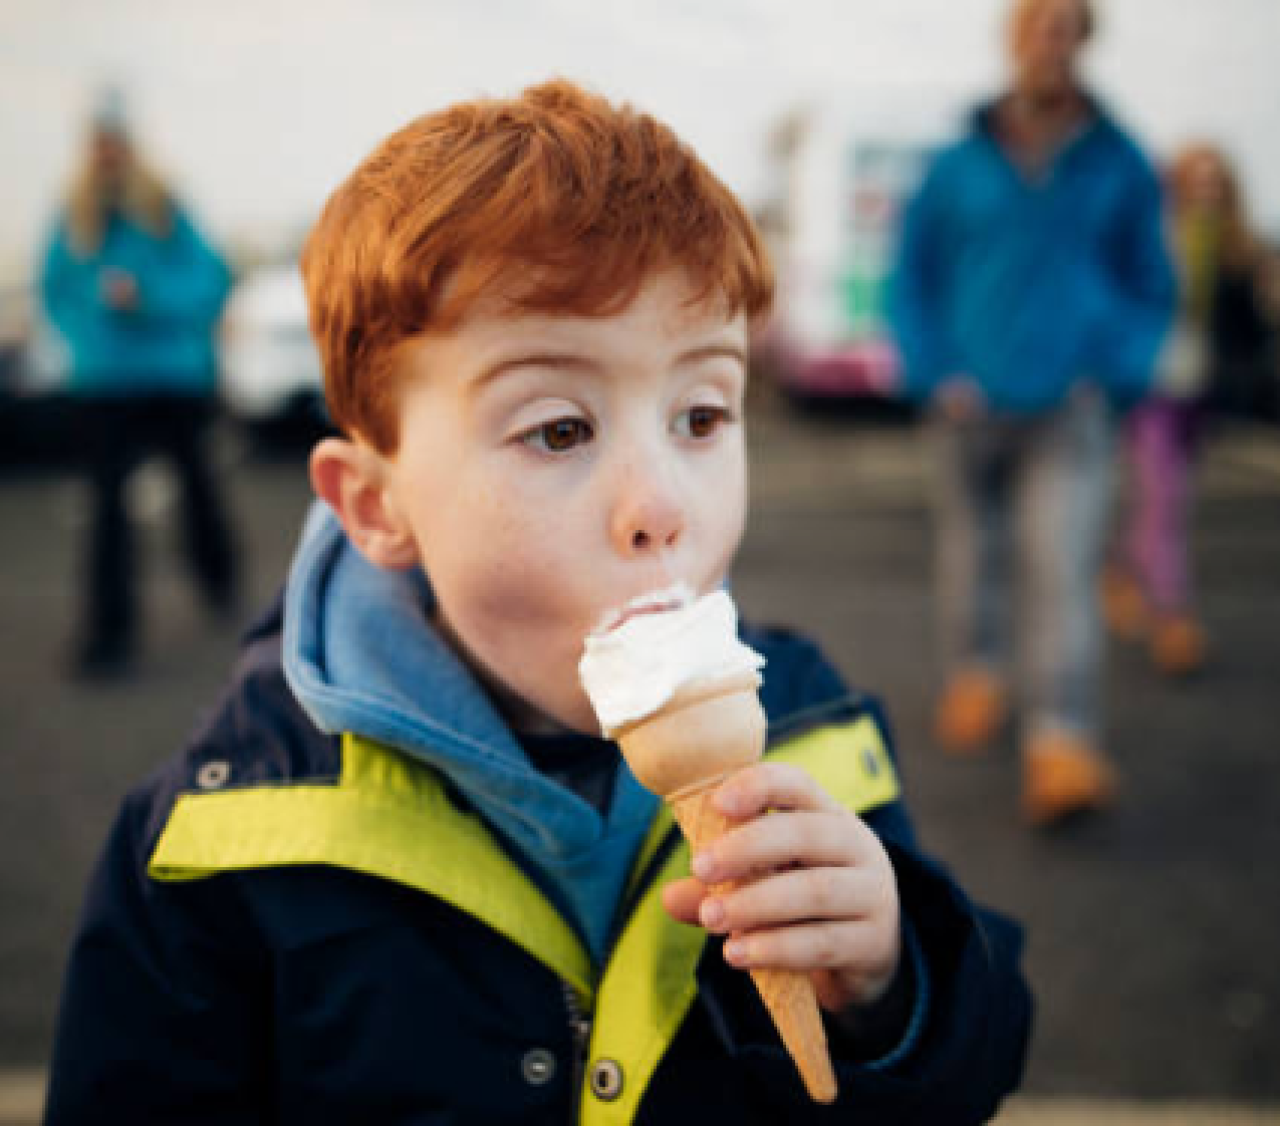 Child eating an ice cream.